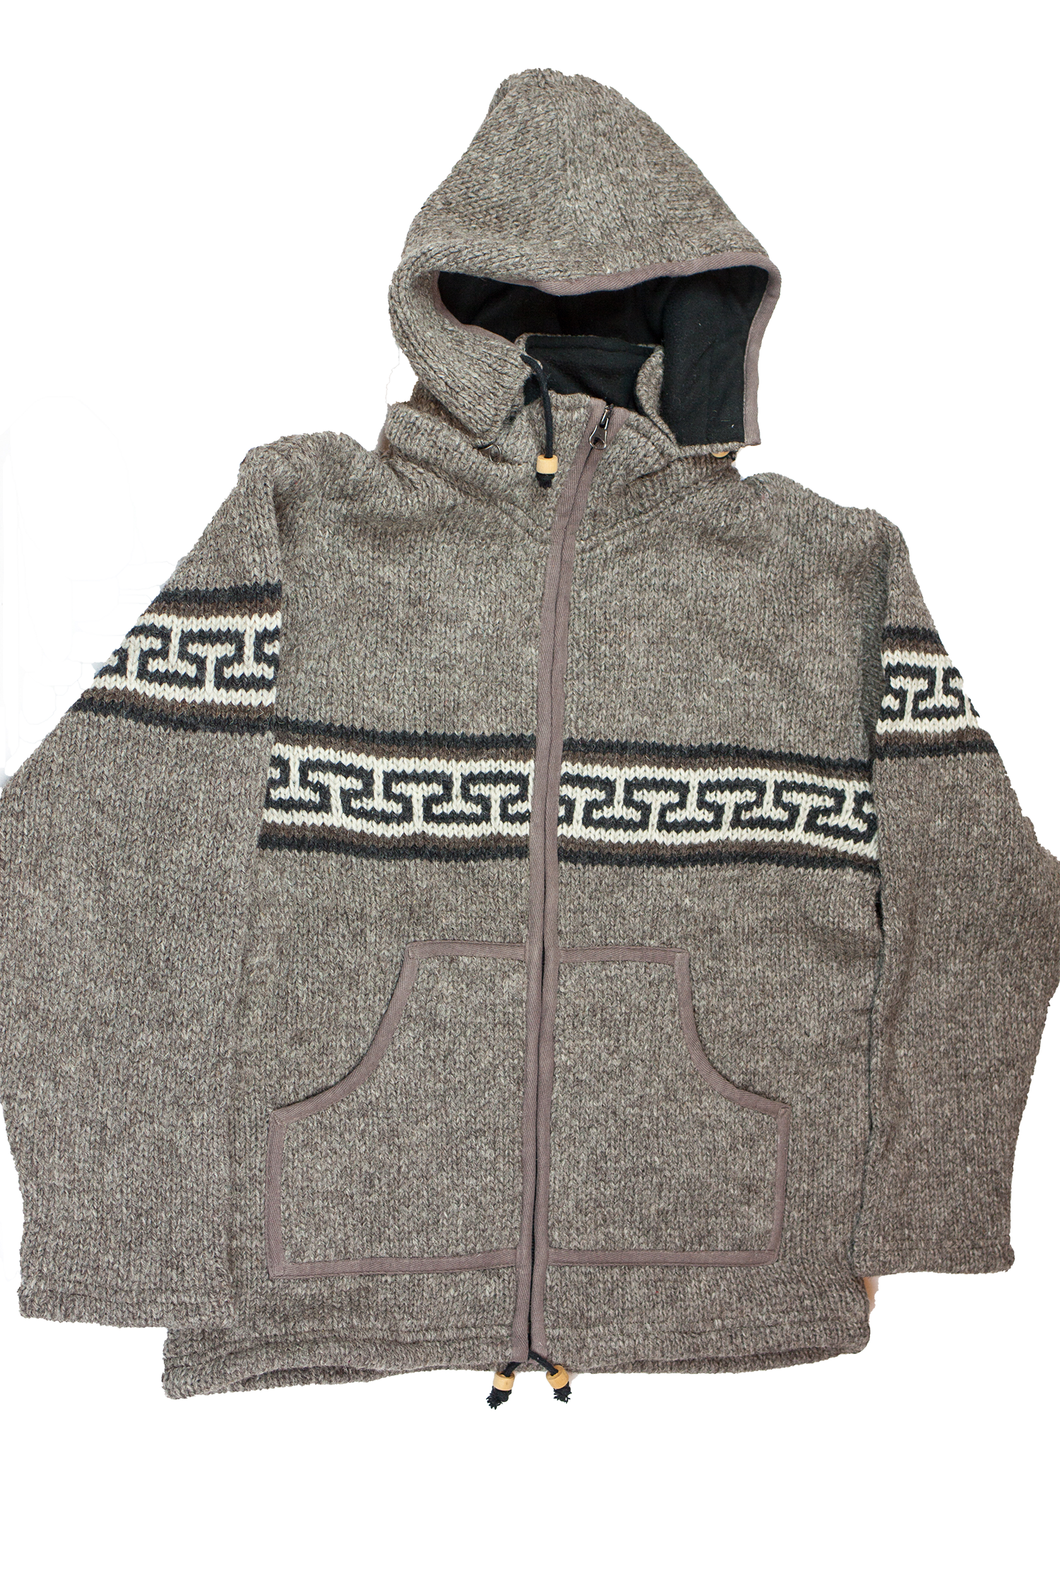 Hand knitted woolen jacket/sweater with soft inner fleece - HMPWJ12